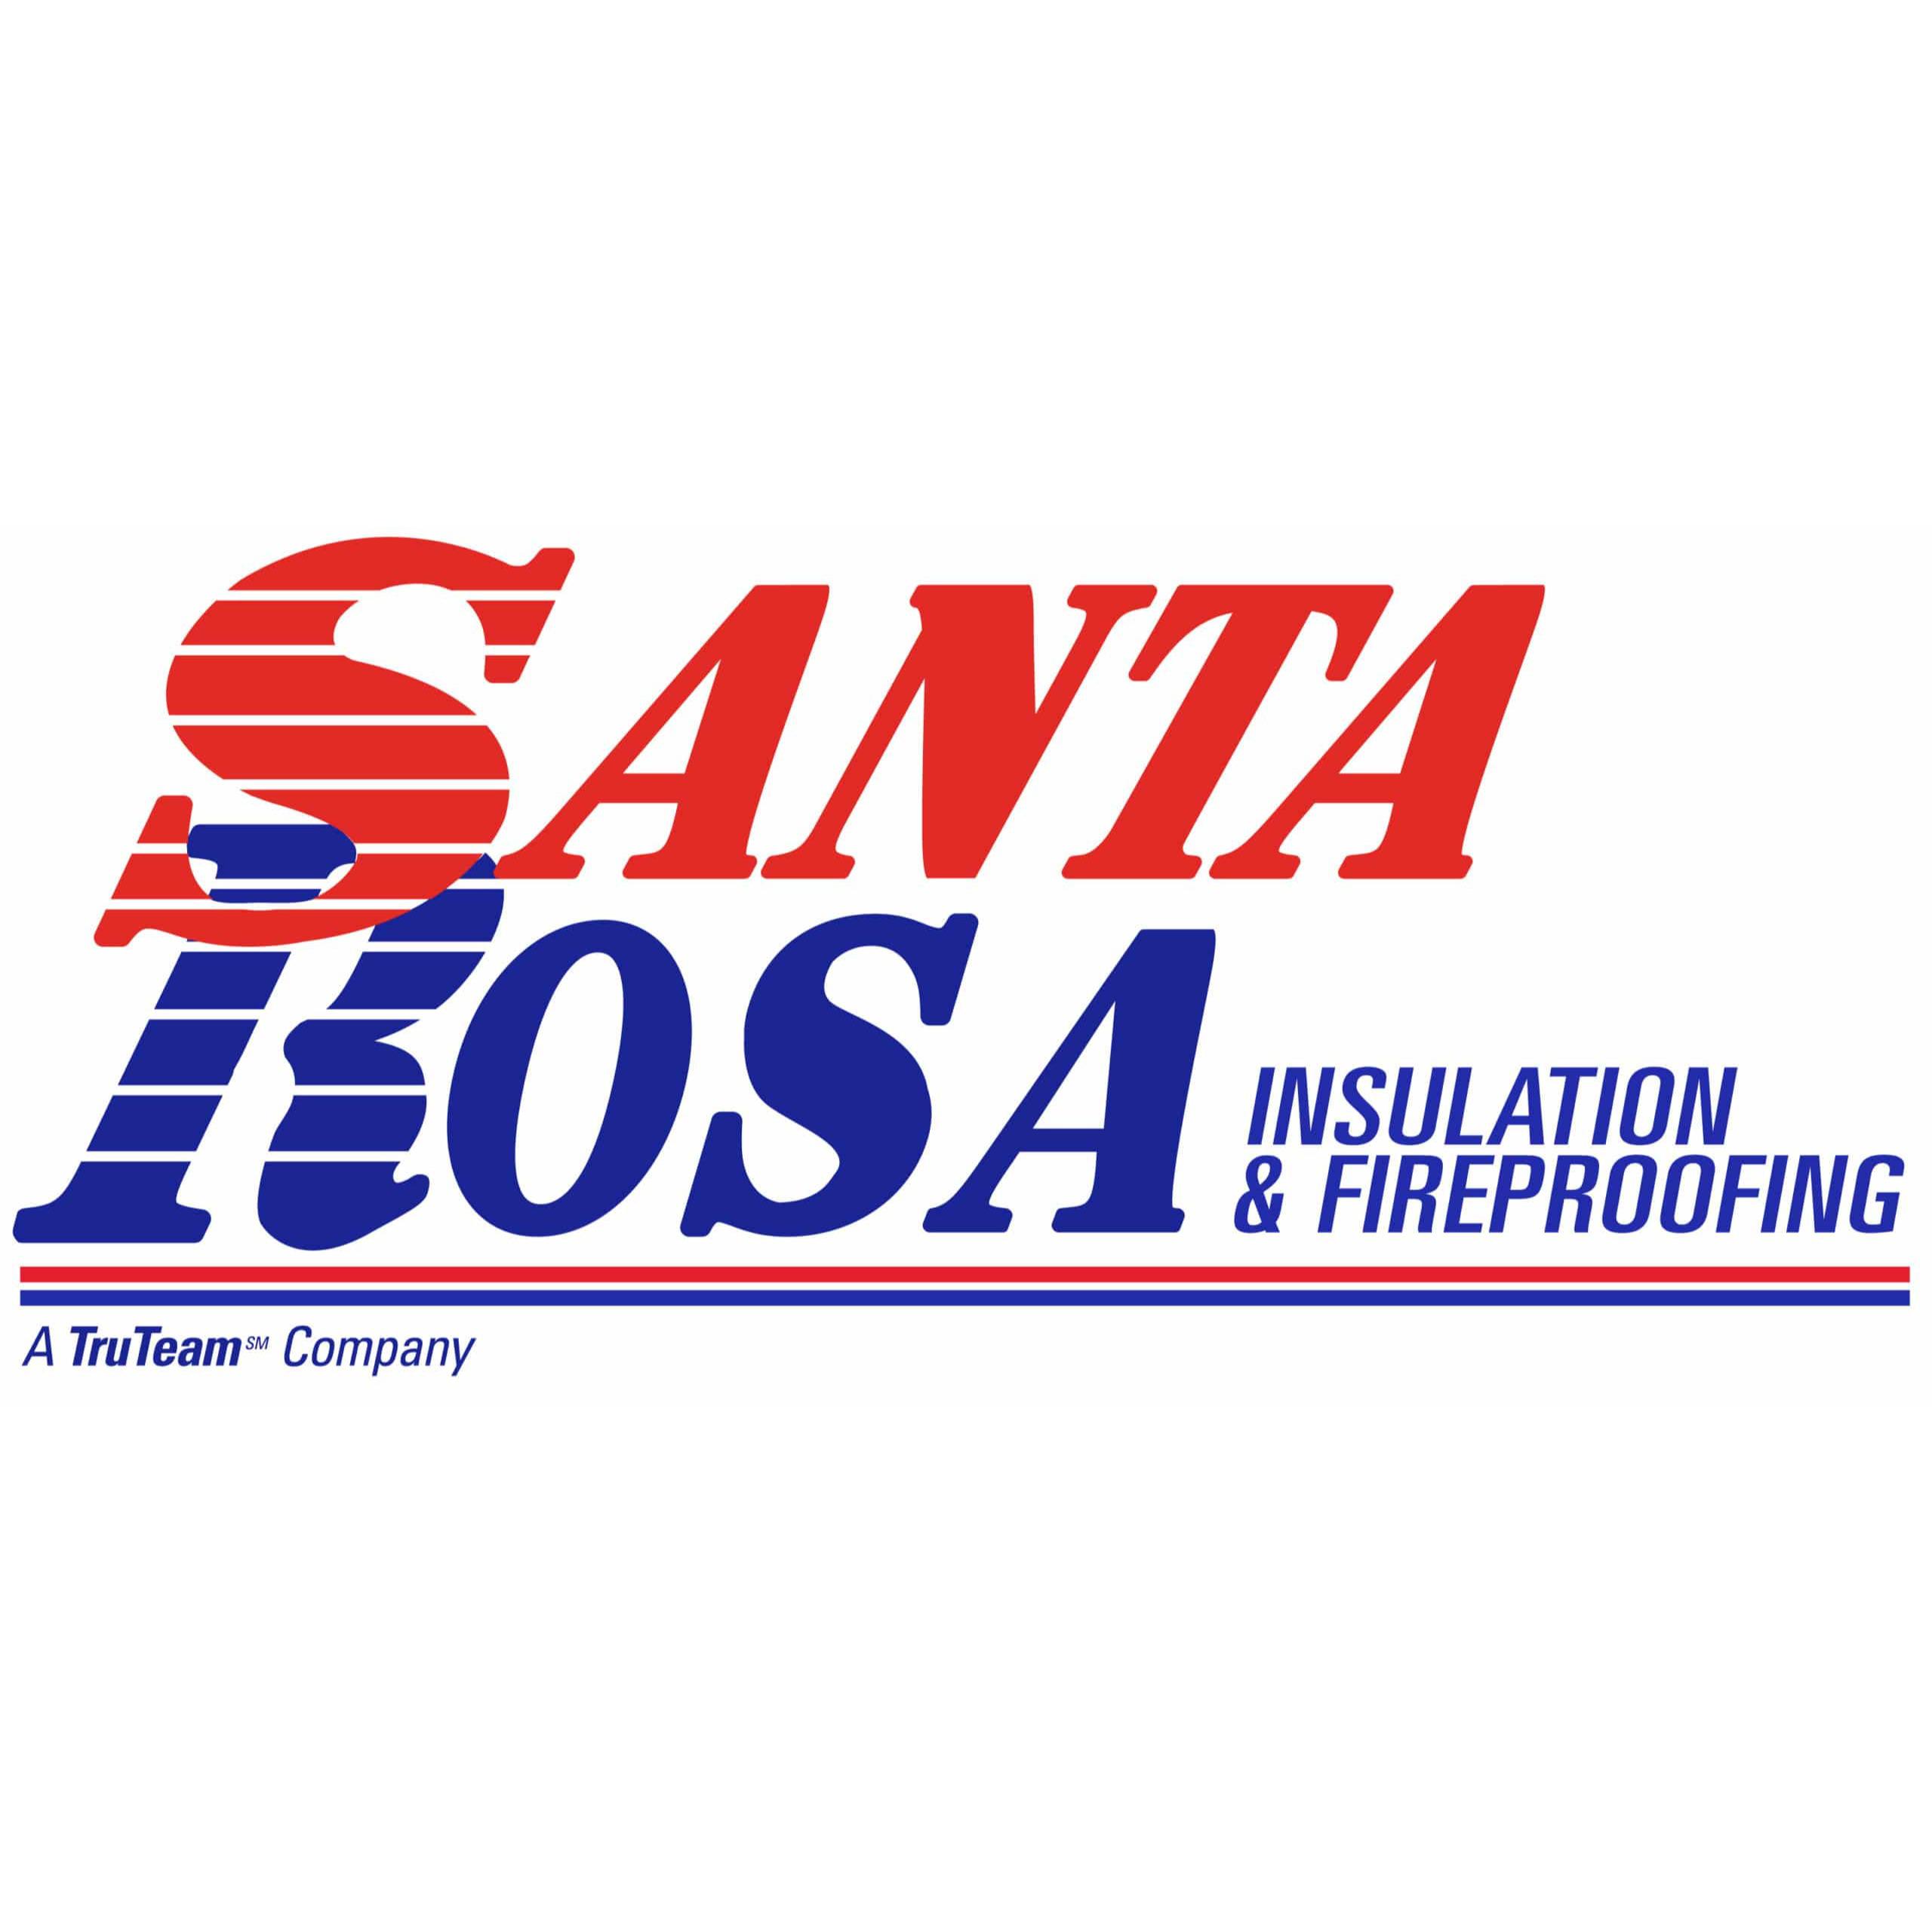 Santa Rosa Insulation & Fireproofing Miami (305)592-5249